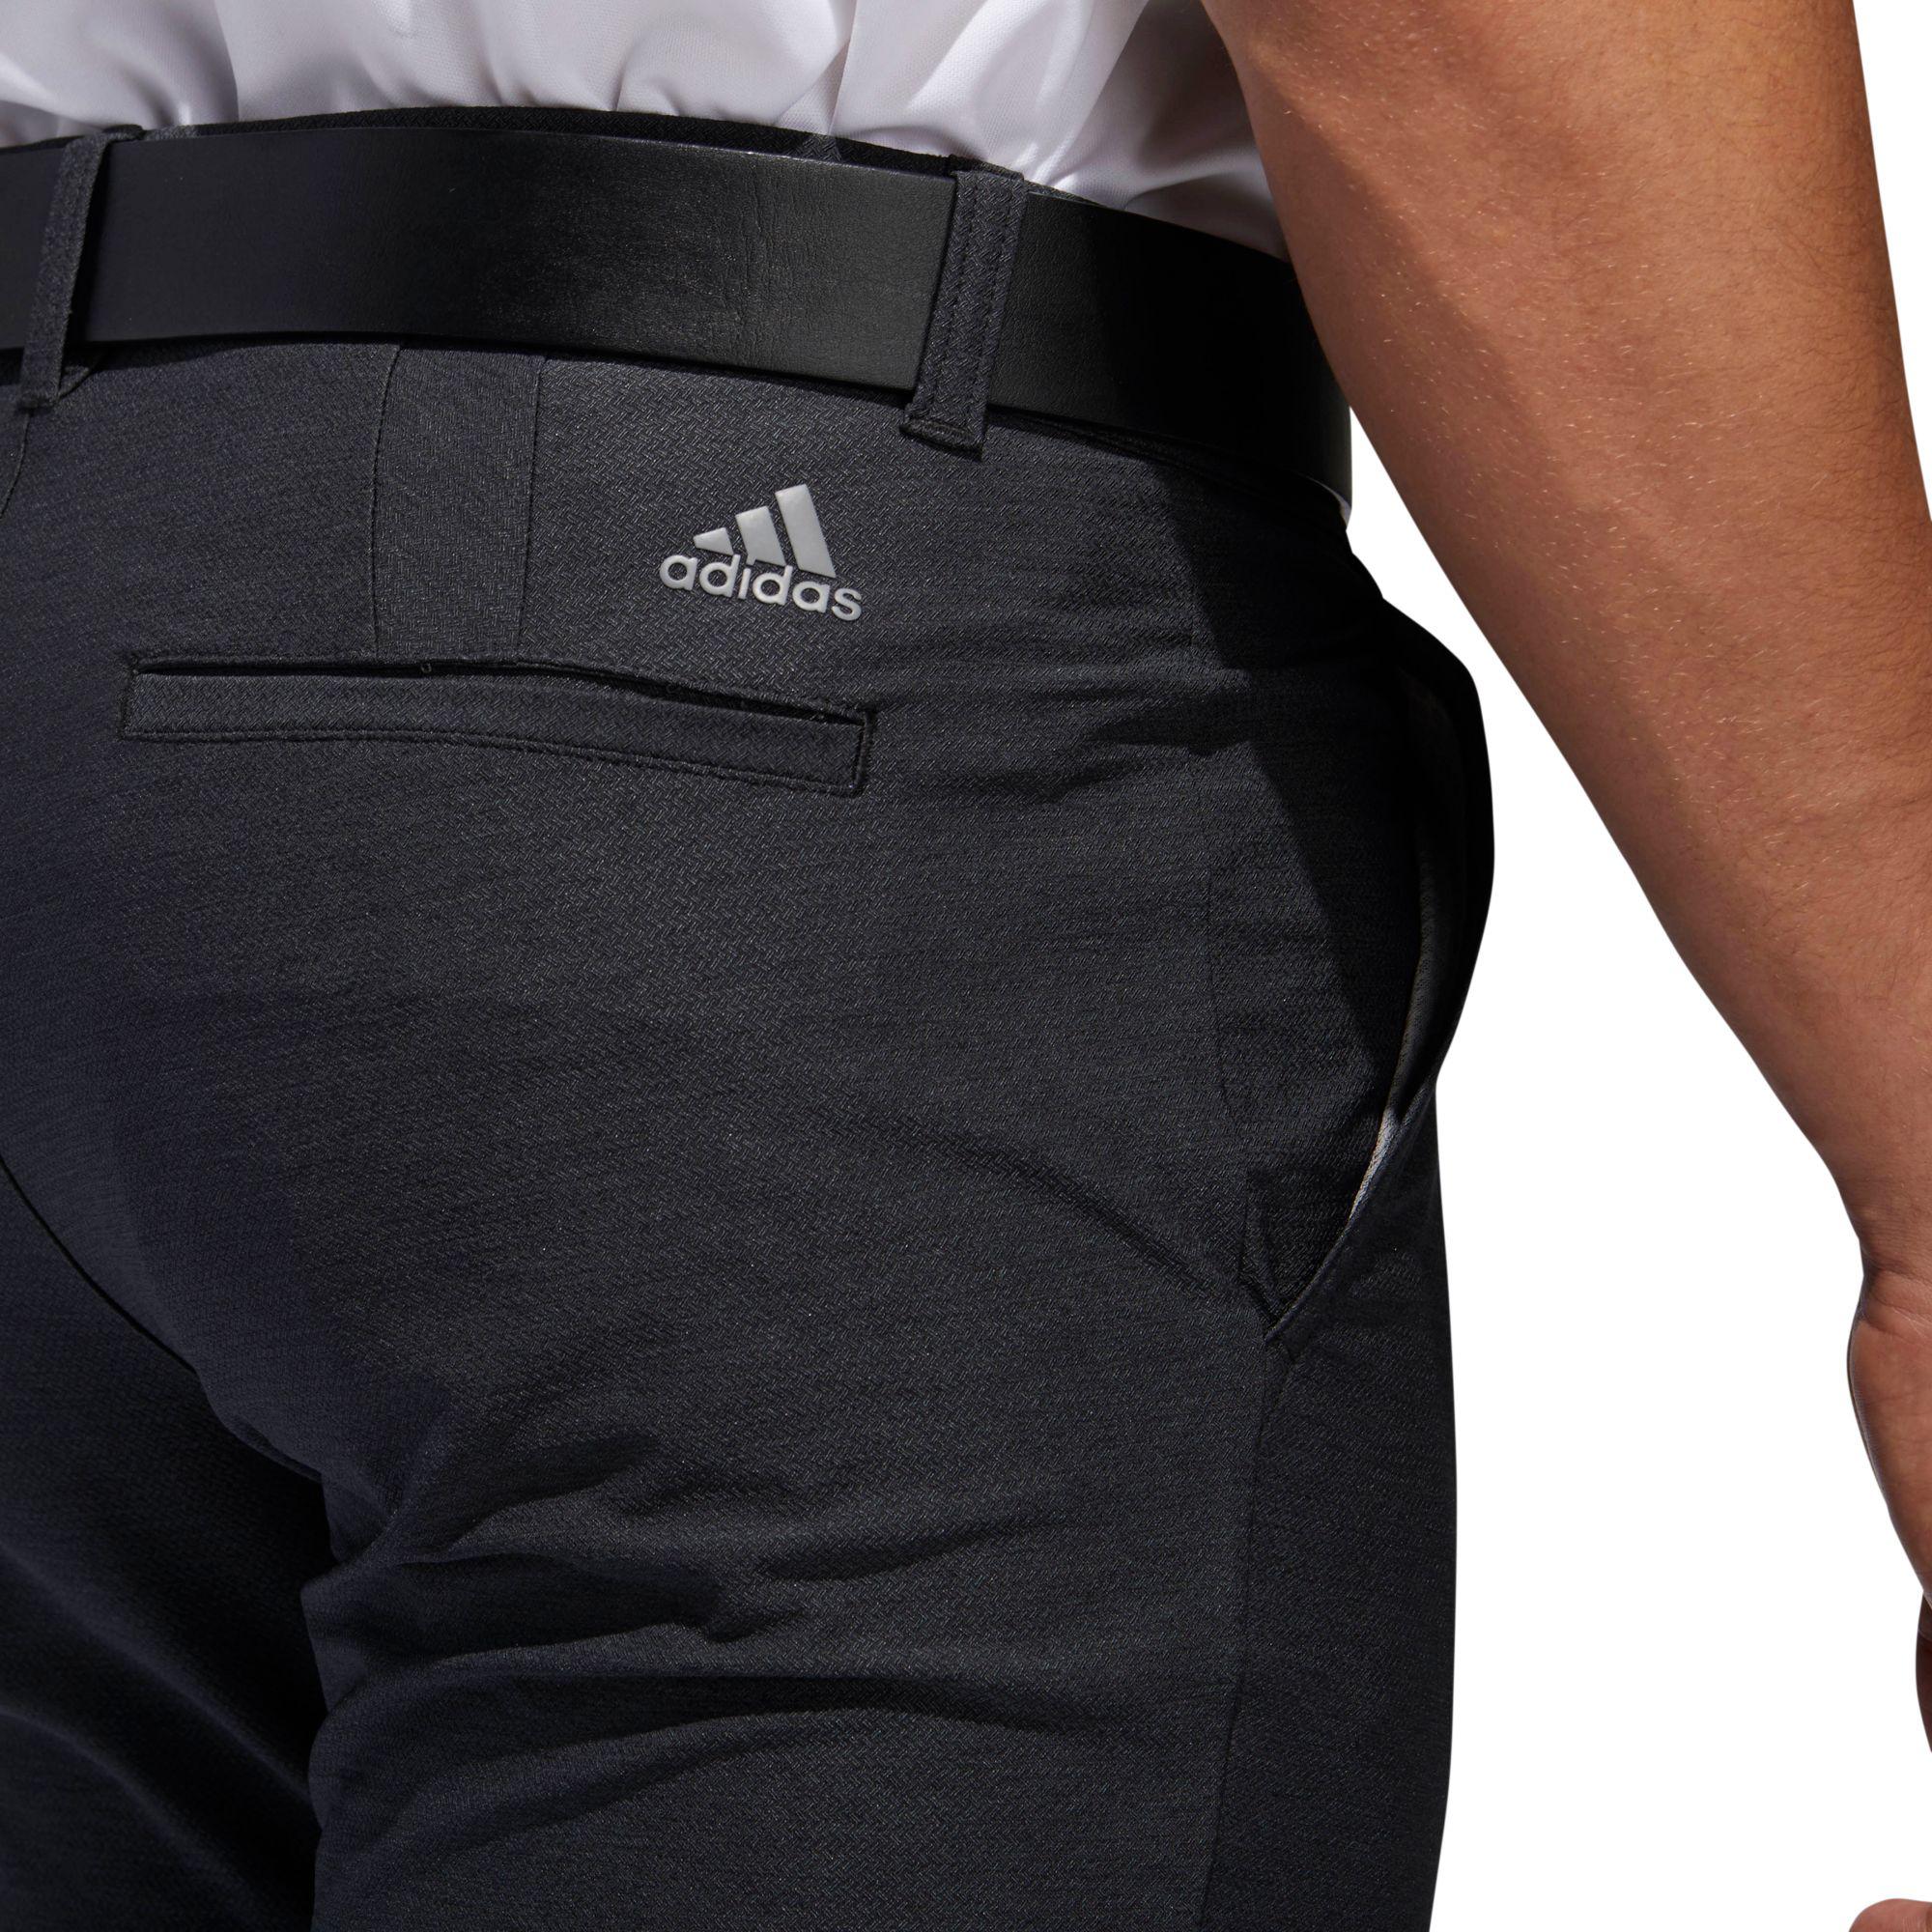 adidas golf men's ultimate 365 twill crosshatch pants